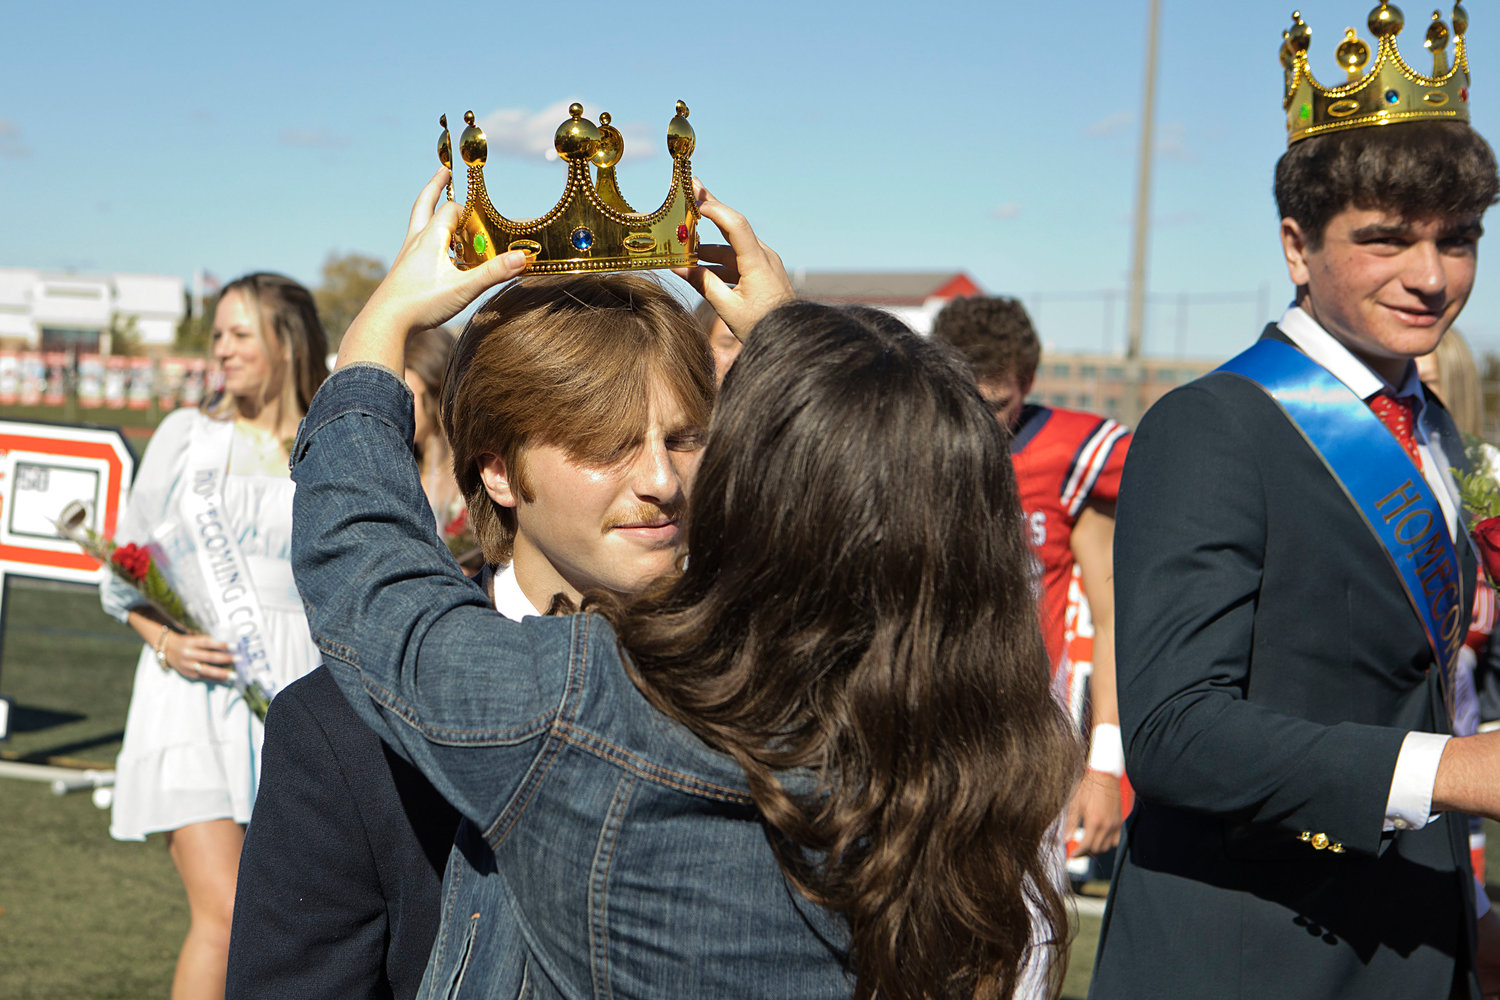 Nick Waycuilis is crowned one of the Homecoming kings.